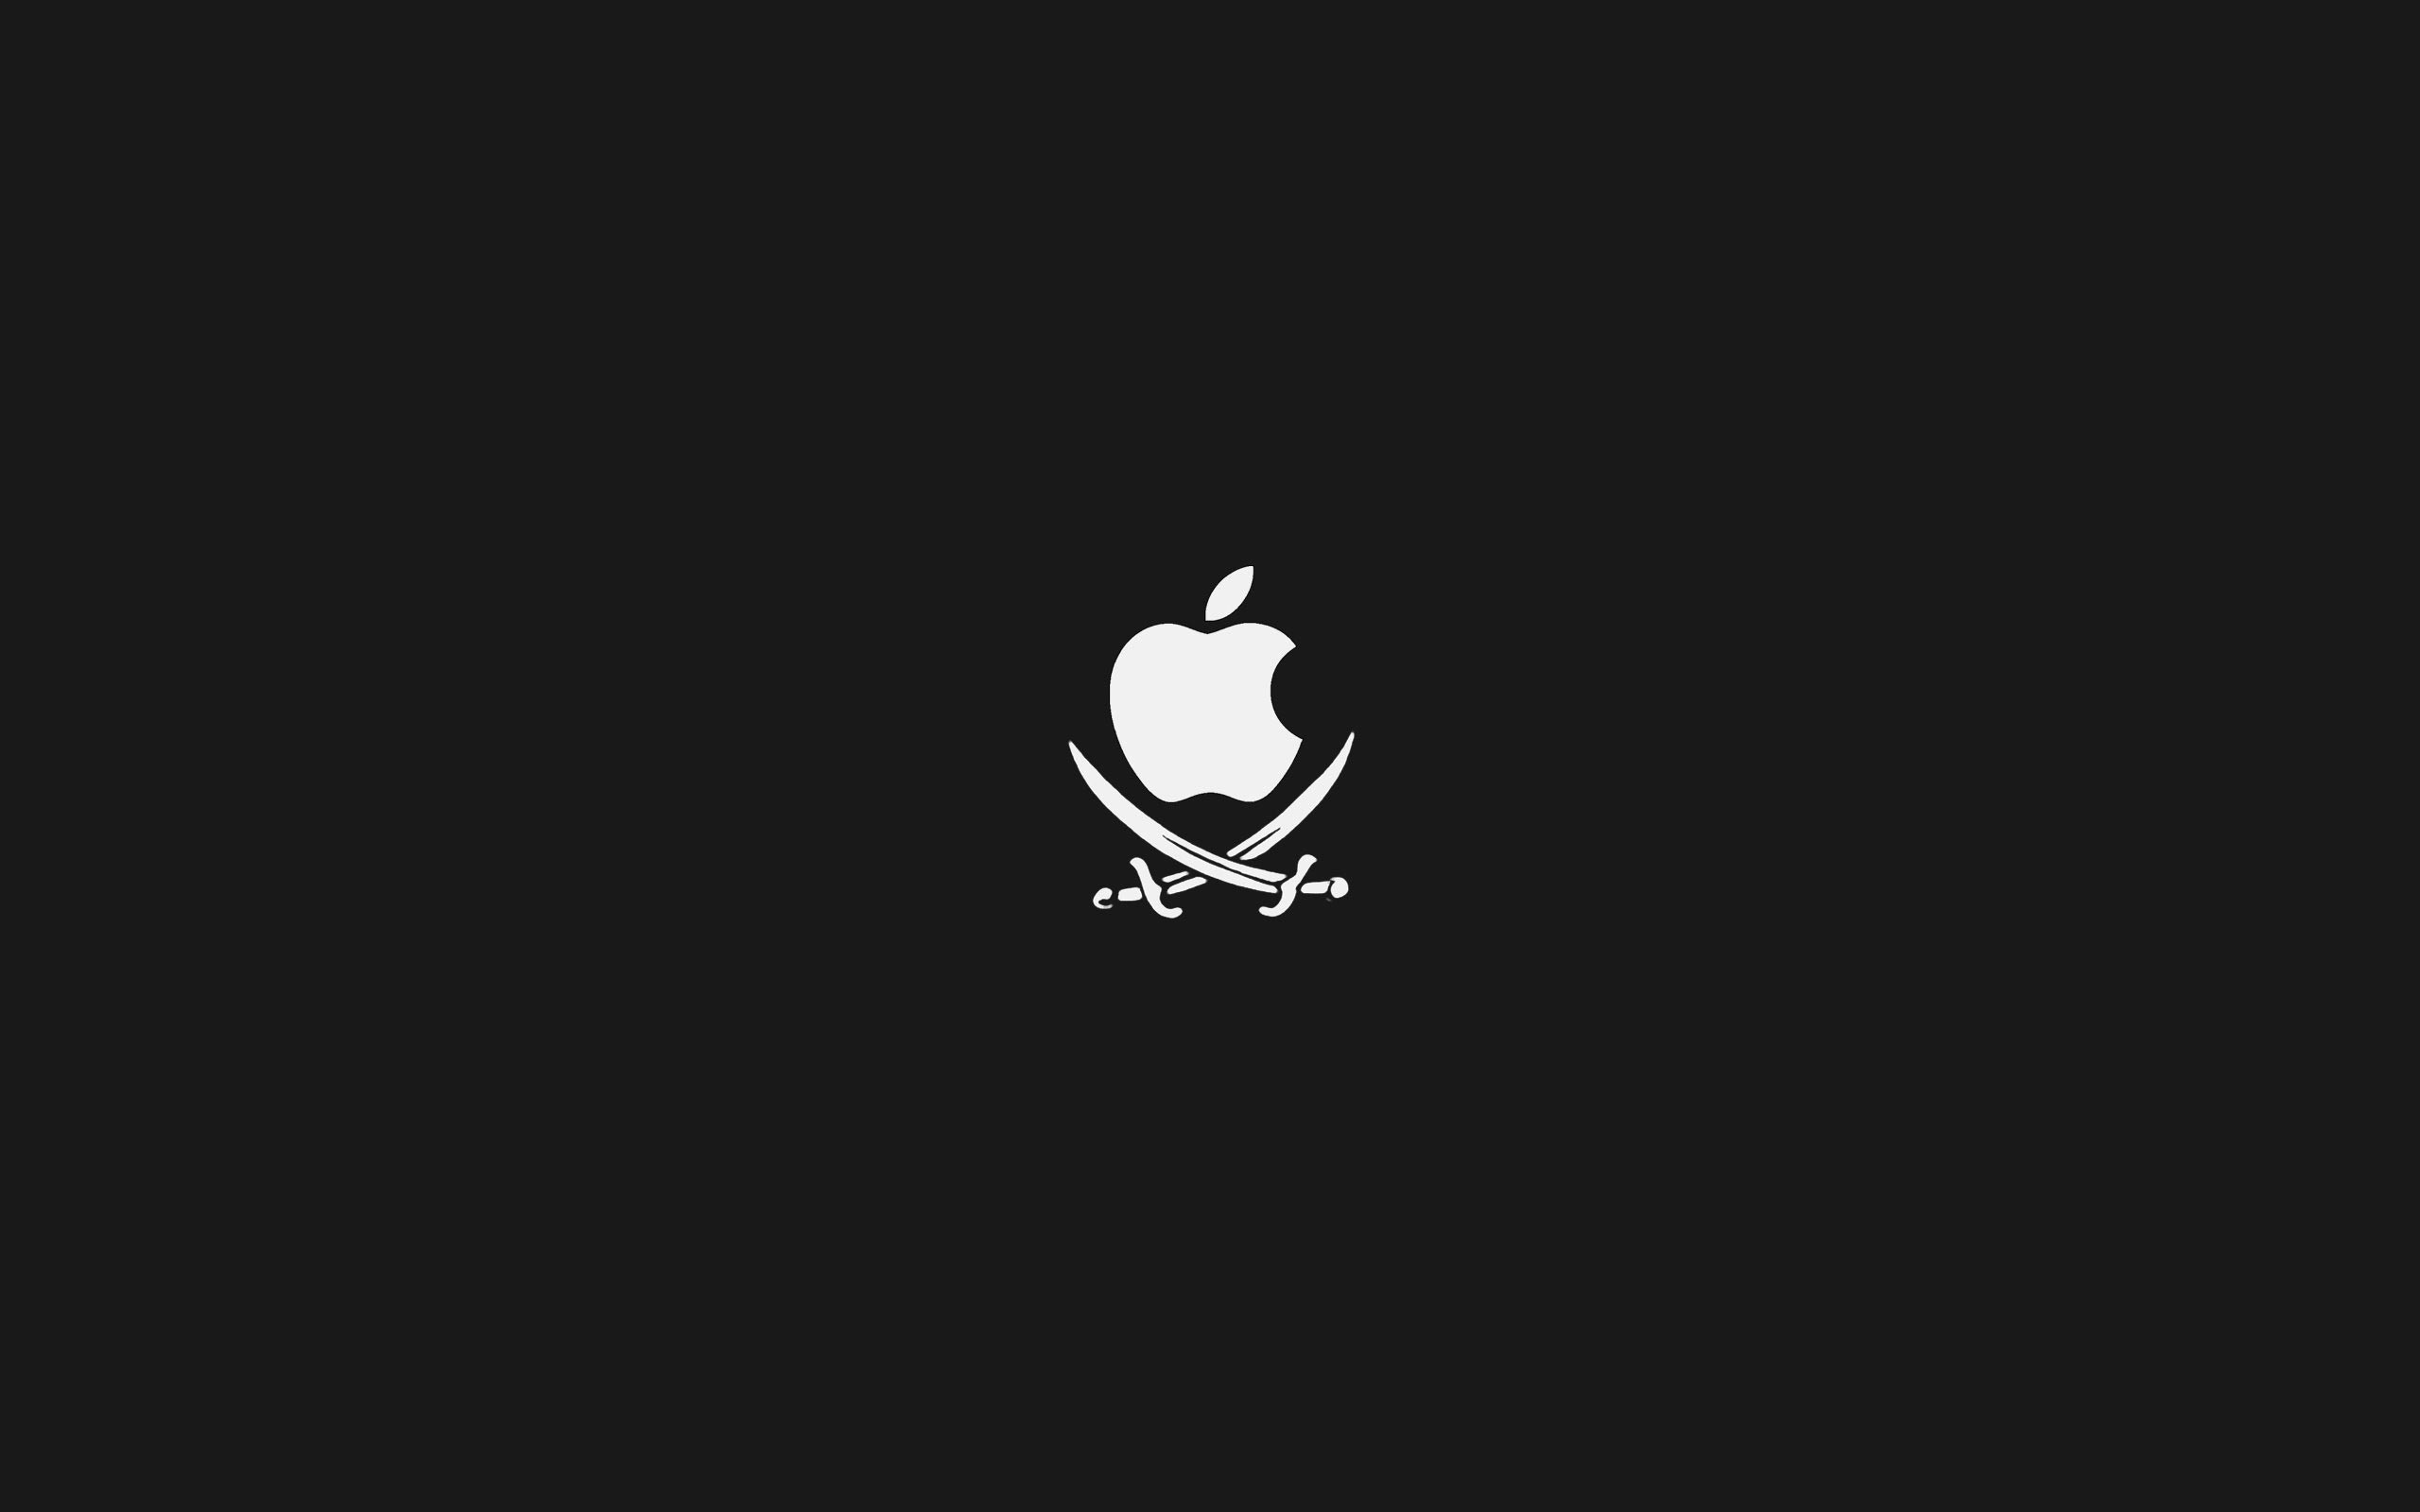 Apple Mac Jolly Roger Flag Wallpaper